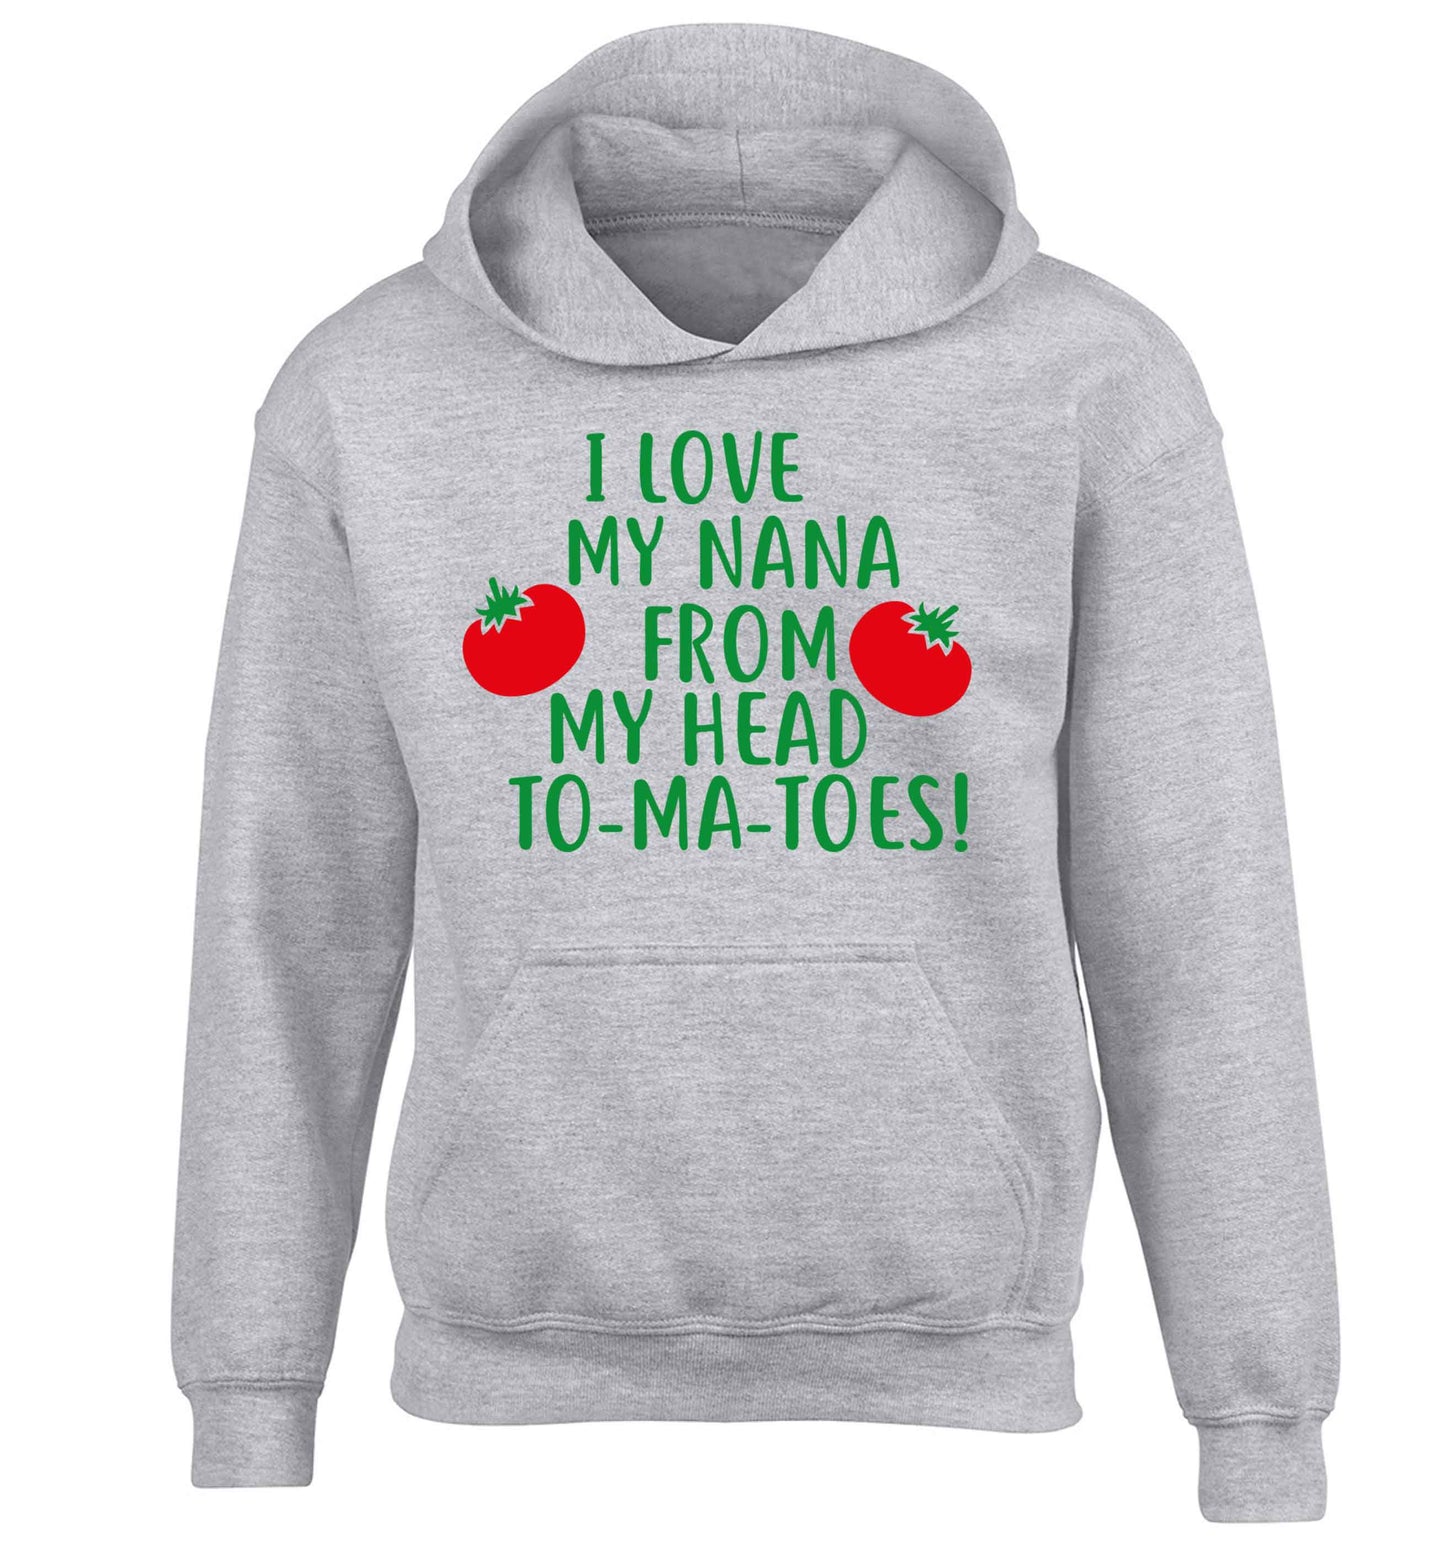 I love my nana from my head to-ma-toes children's grey hoodie 12-13 Years